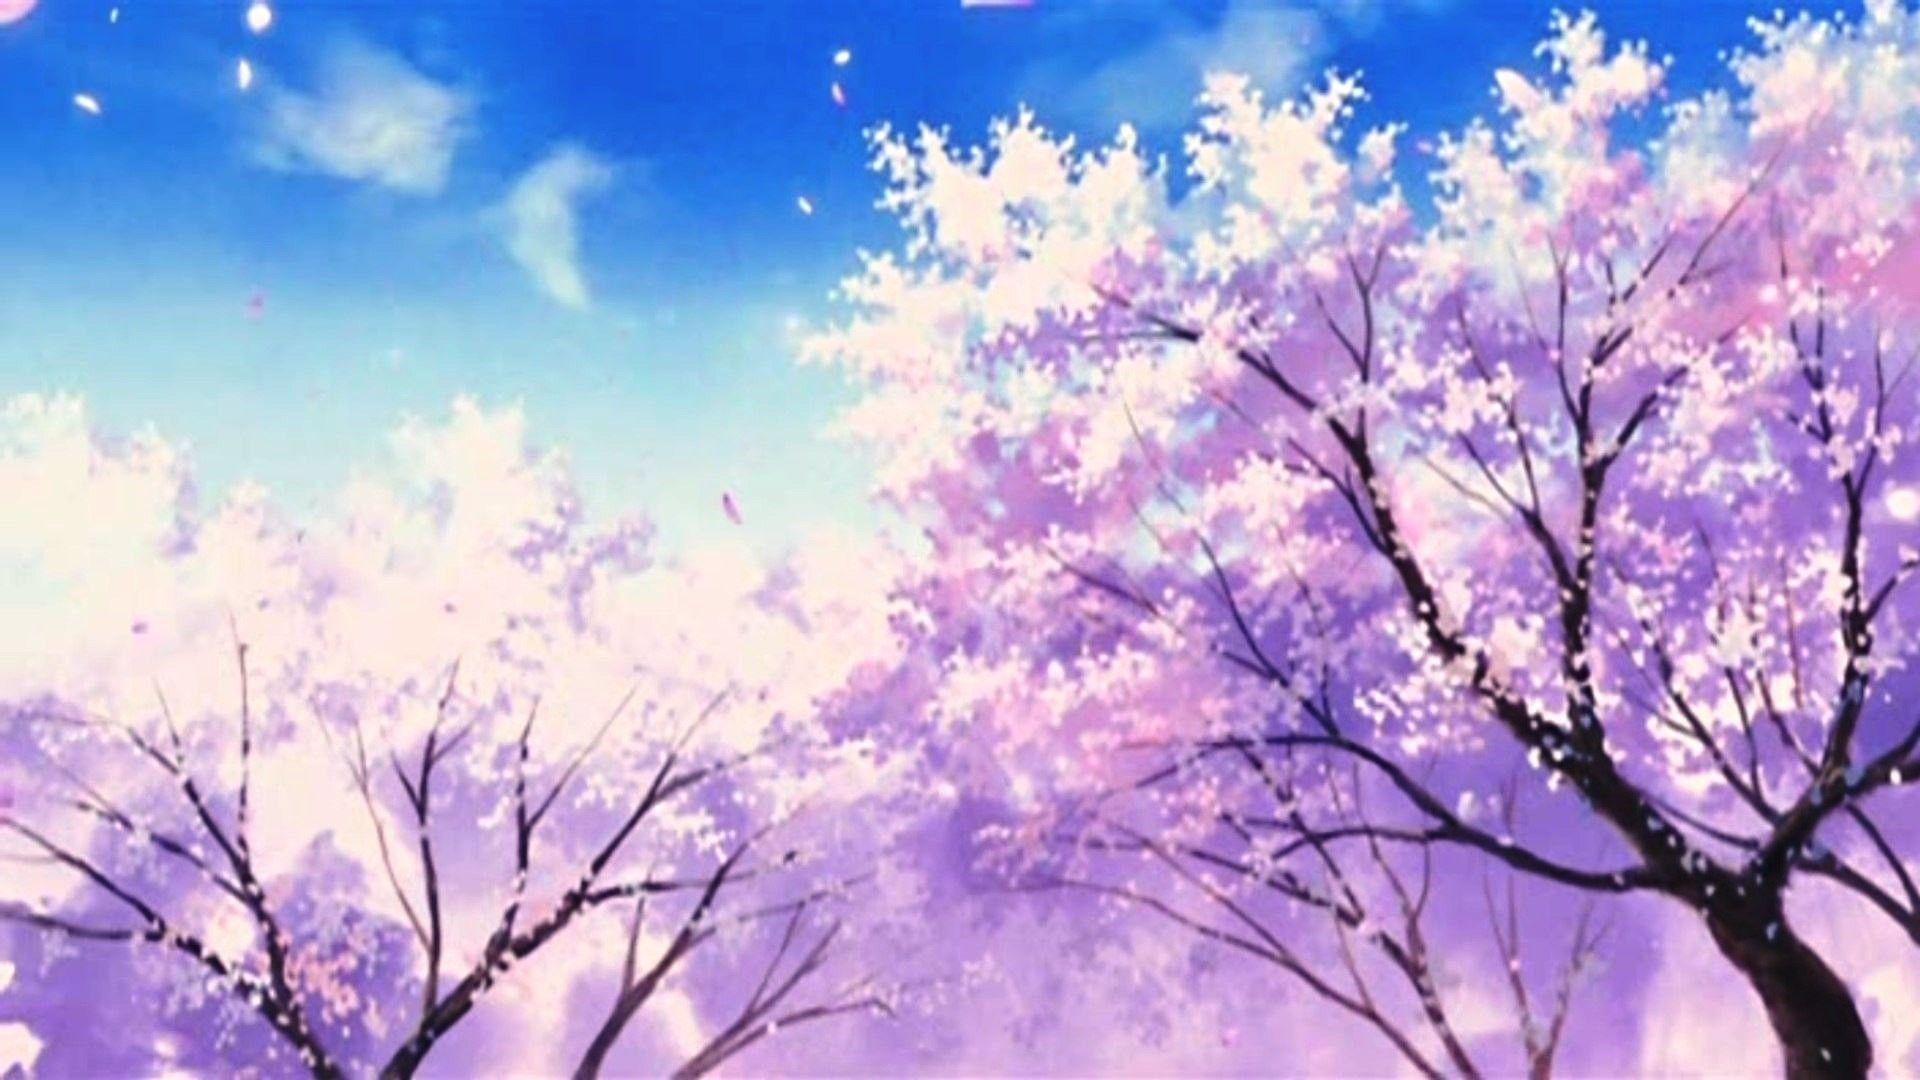 1920x1080 Centimet trên giây Anime Makoto Shinkai Skyscapes - Anime